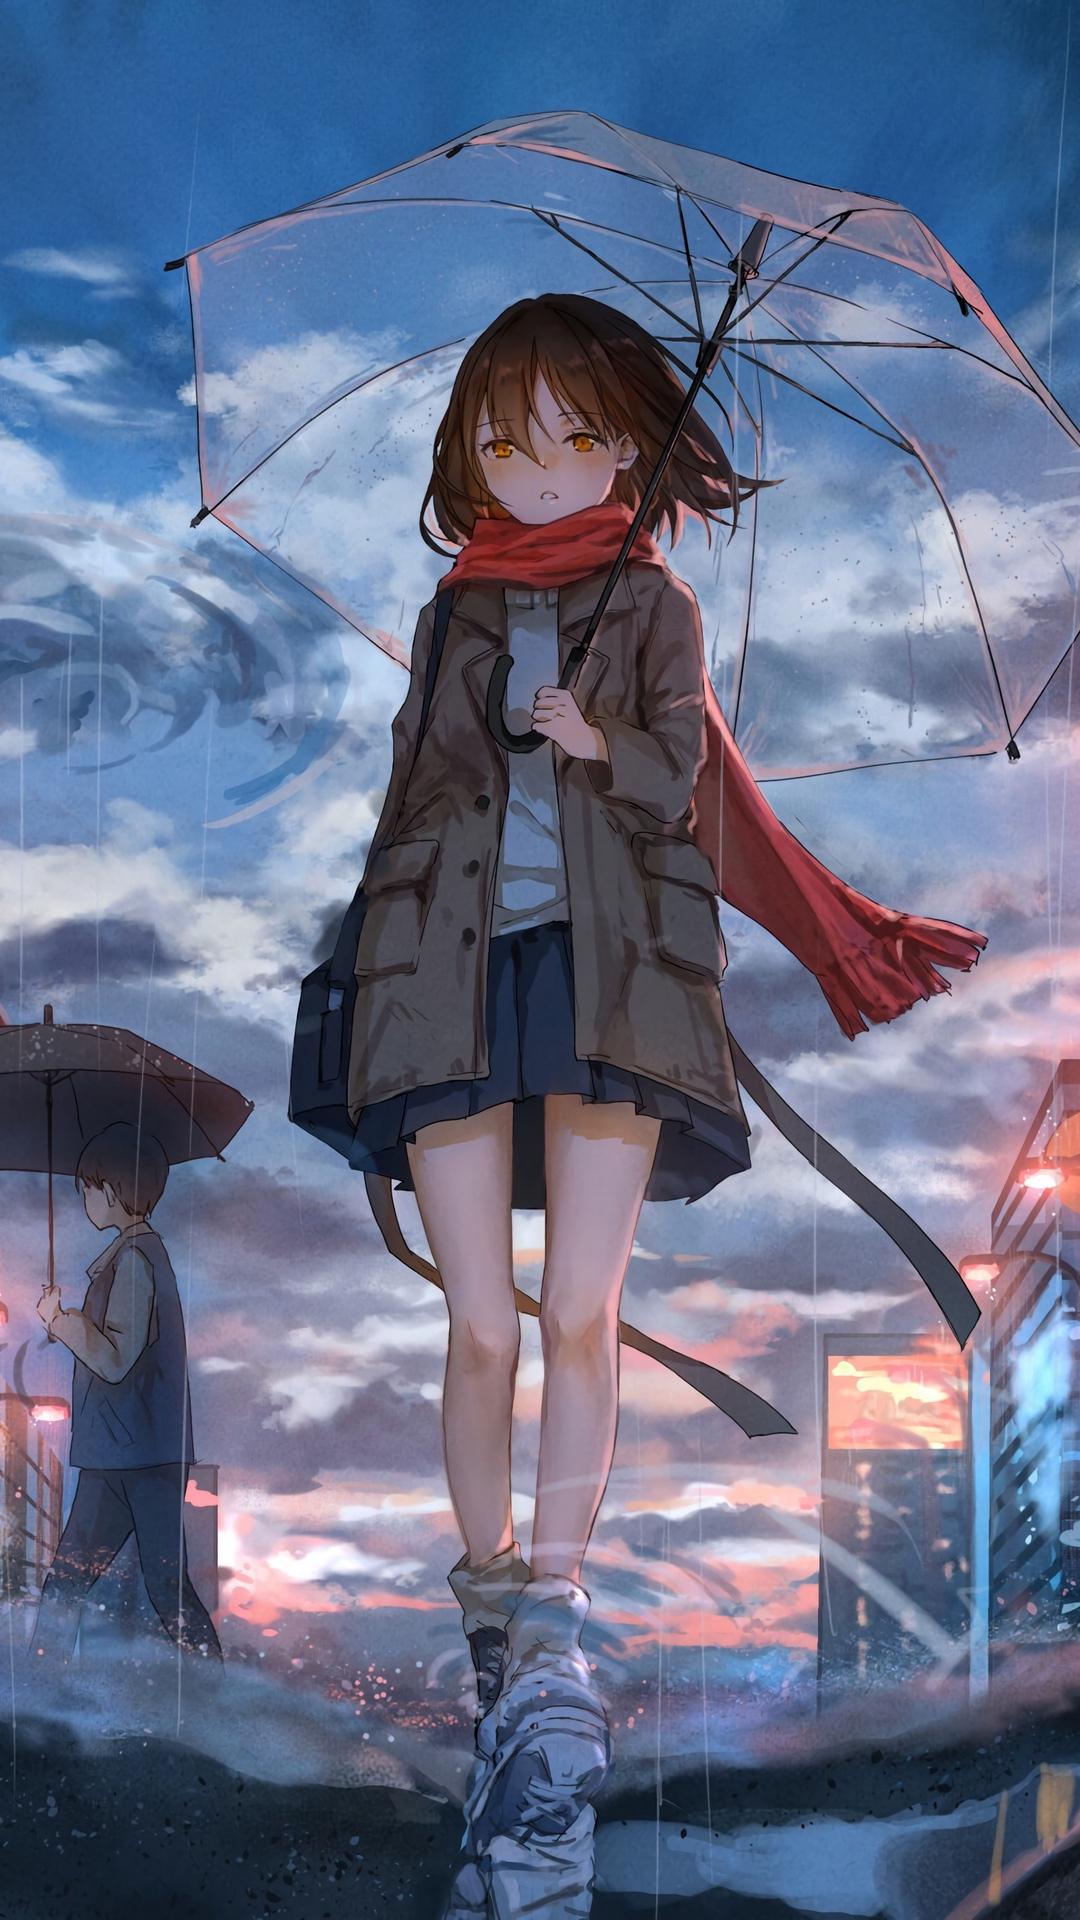 Anime Girl Umbrella Wallpapers Top Free Anime Girl Umbrella Backgrounds Wallpaperaccess